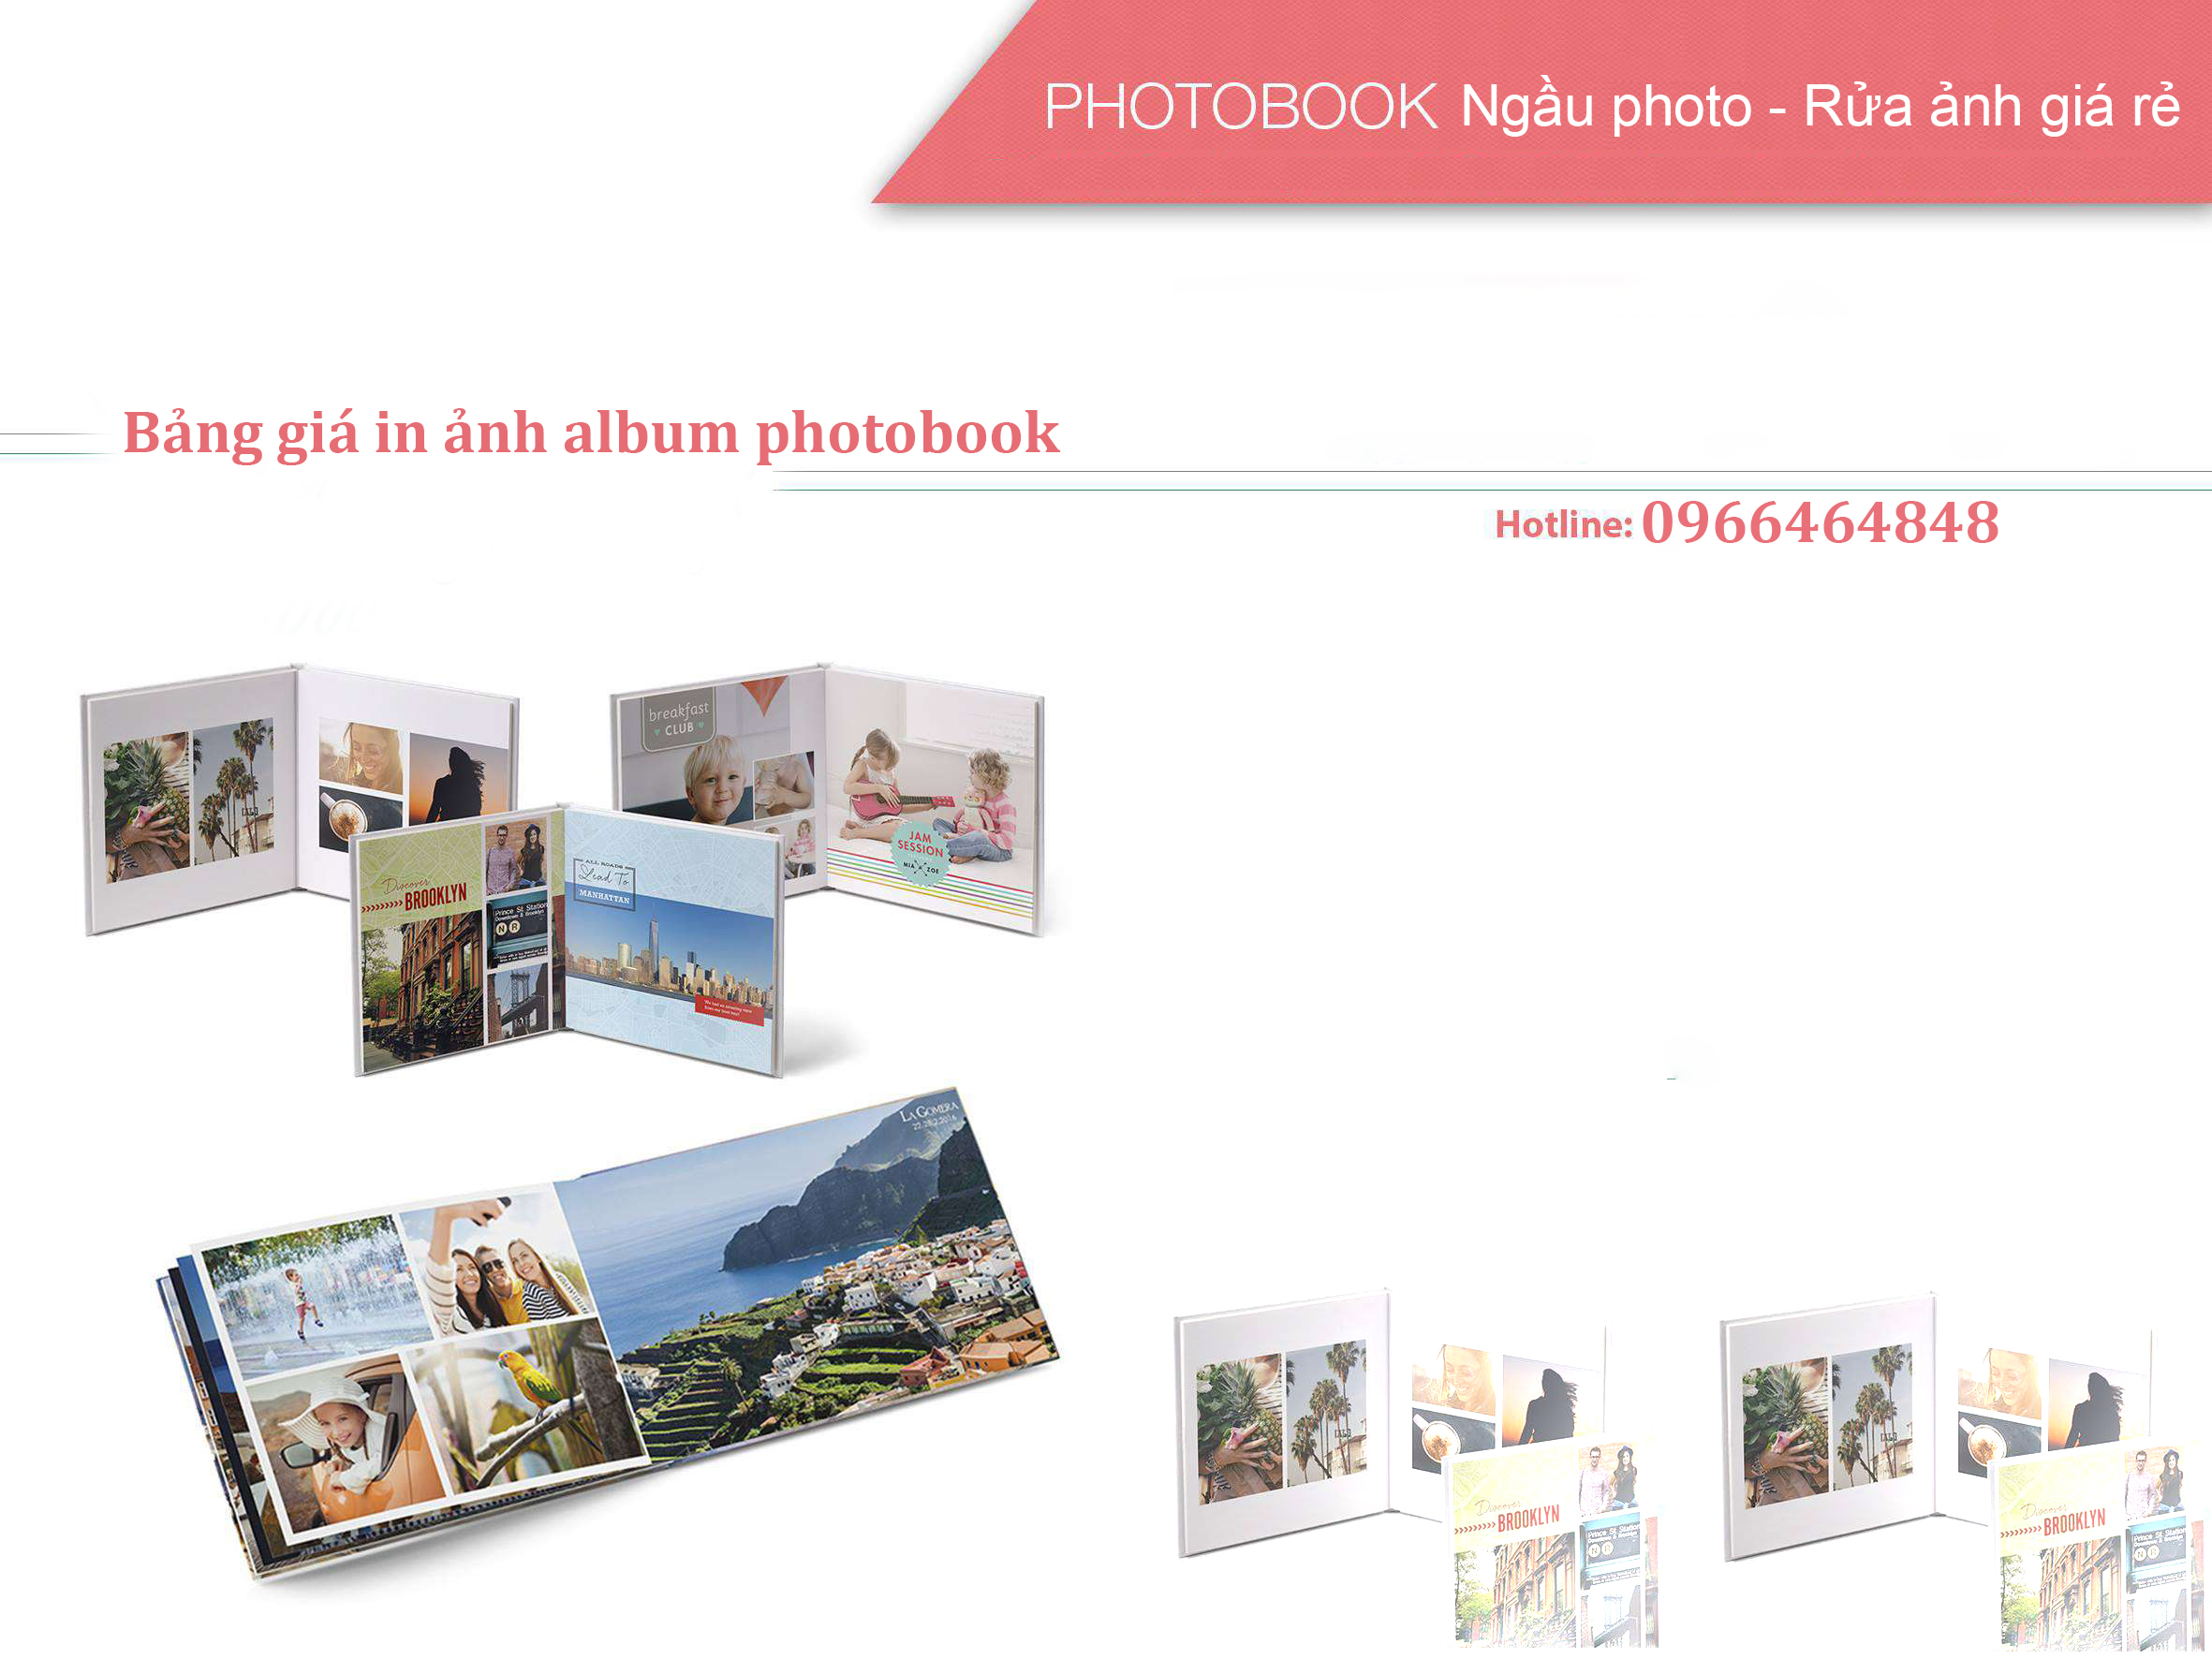 Bảng giá in ảnh album photobook